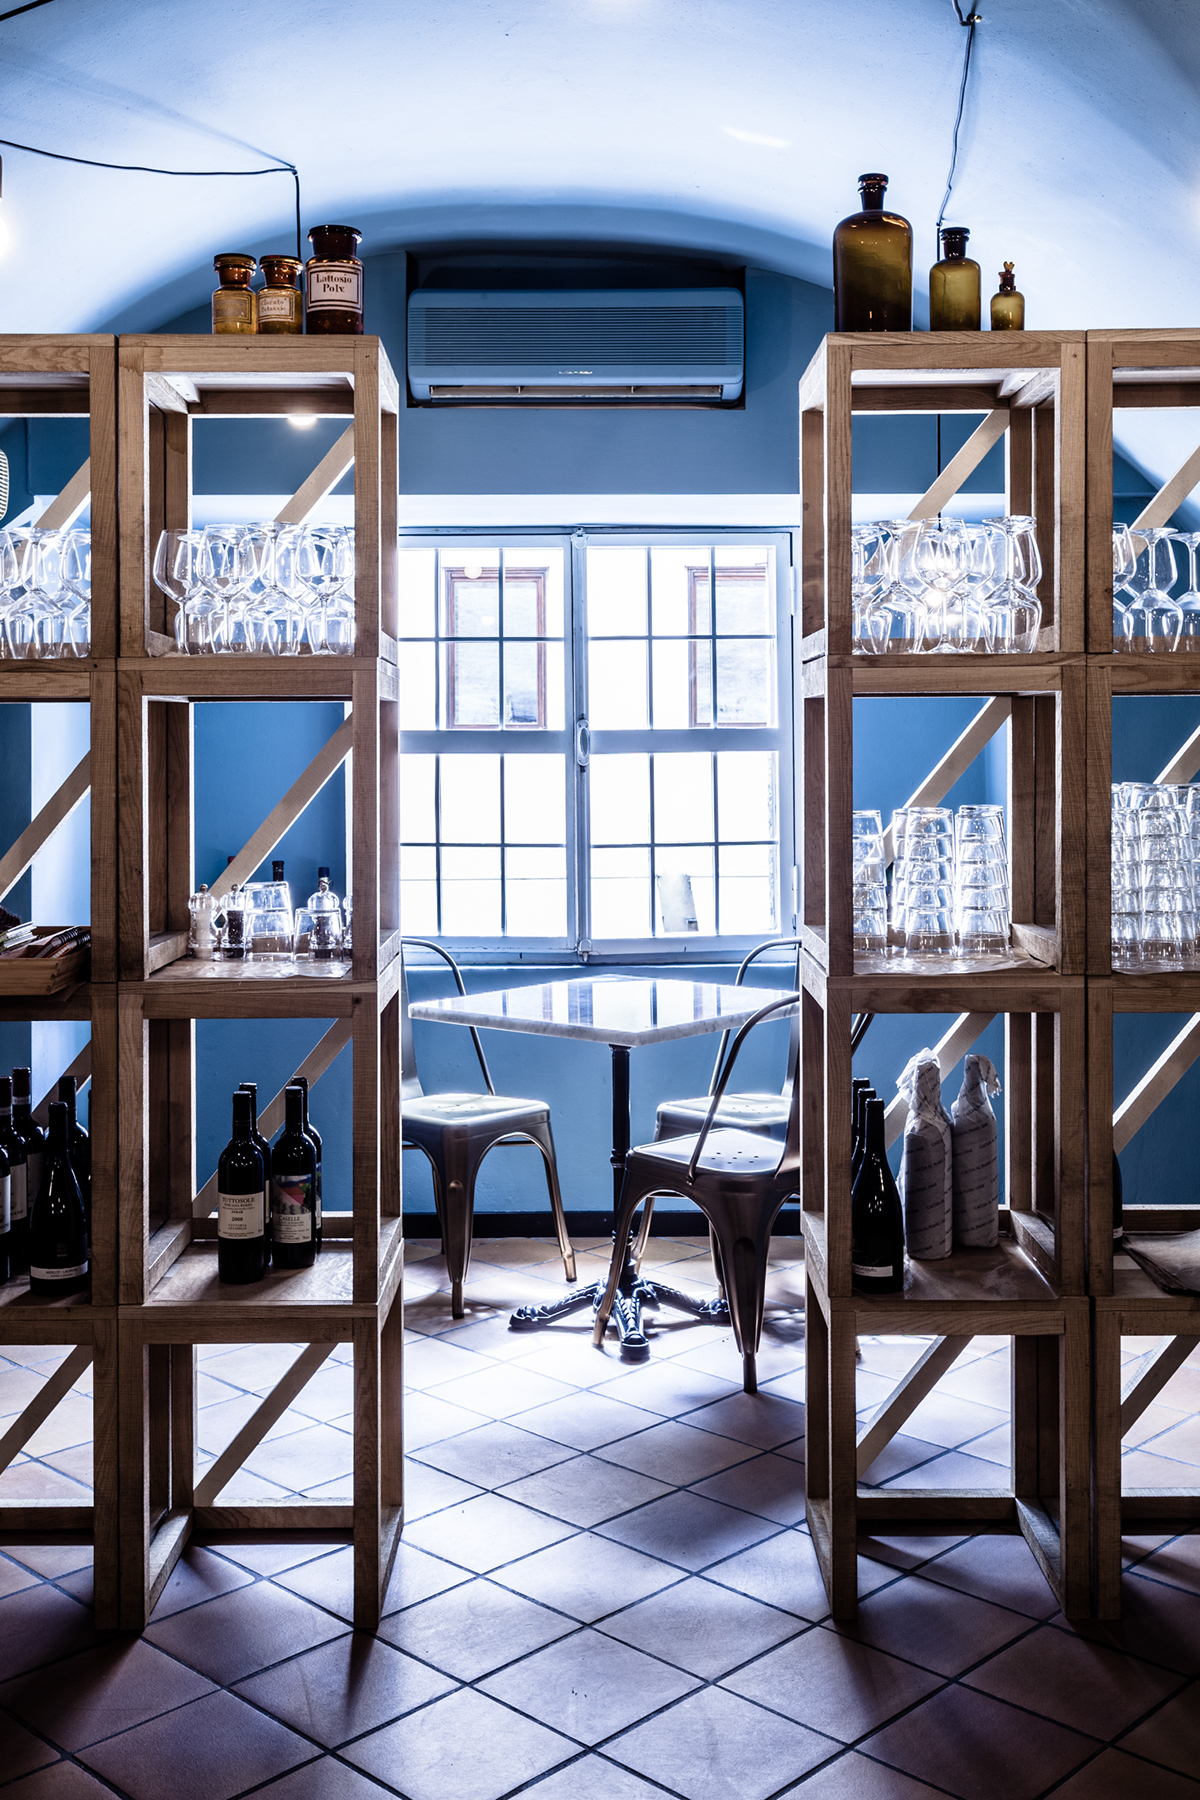 Bistrot restaurant architetture interiors design Photography 